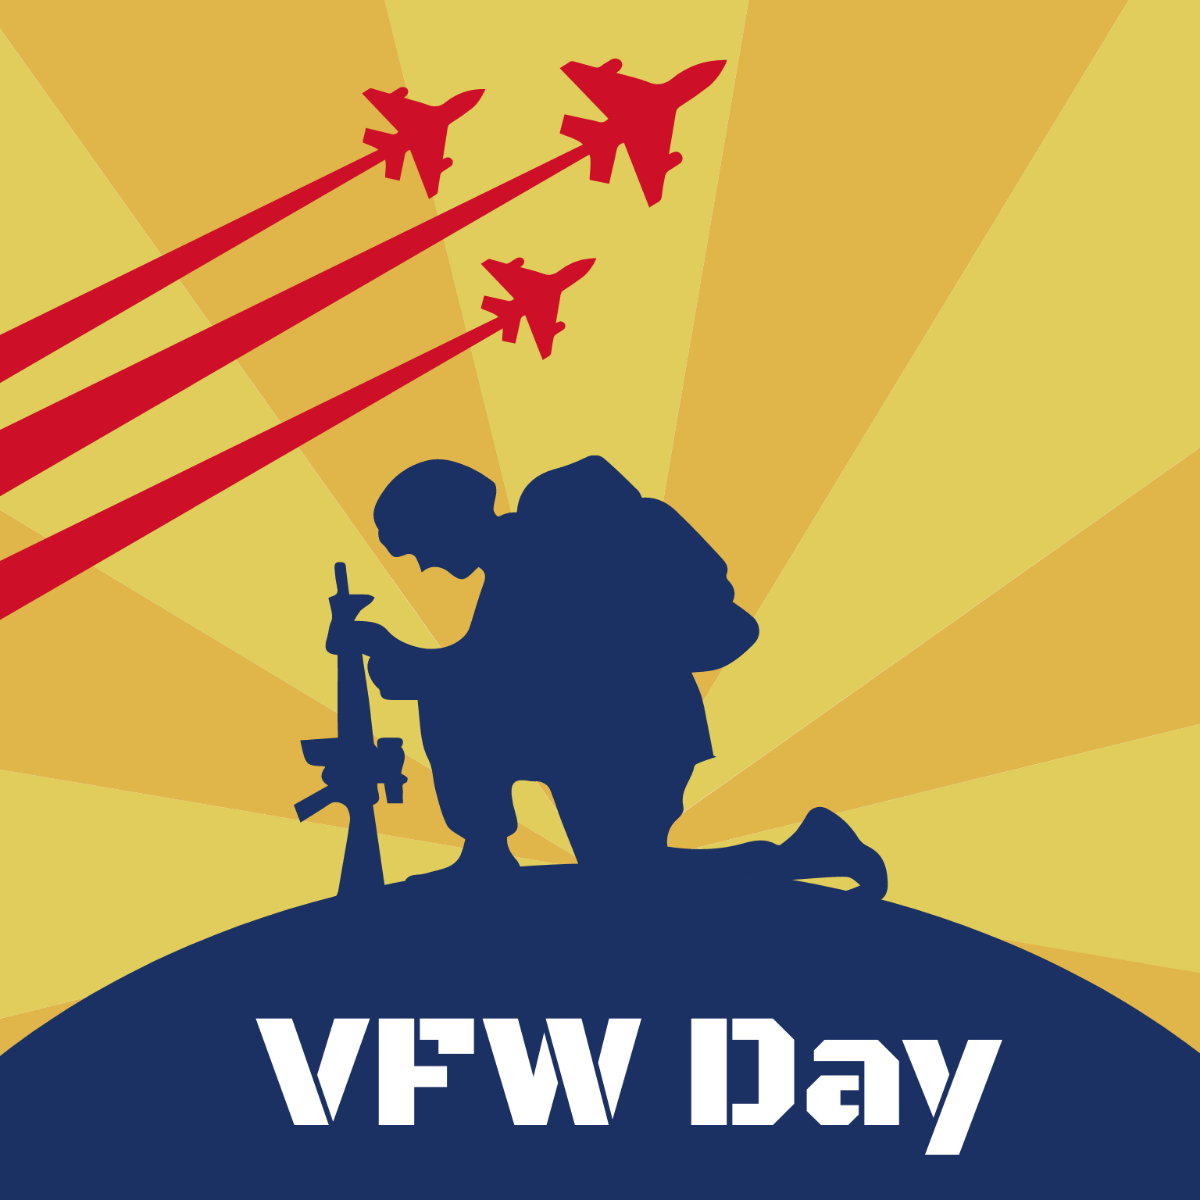 Happy VFW Day Illustration